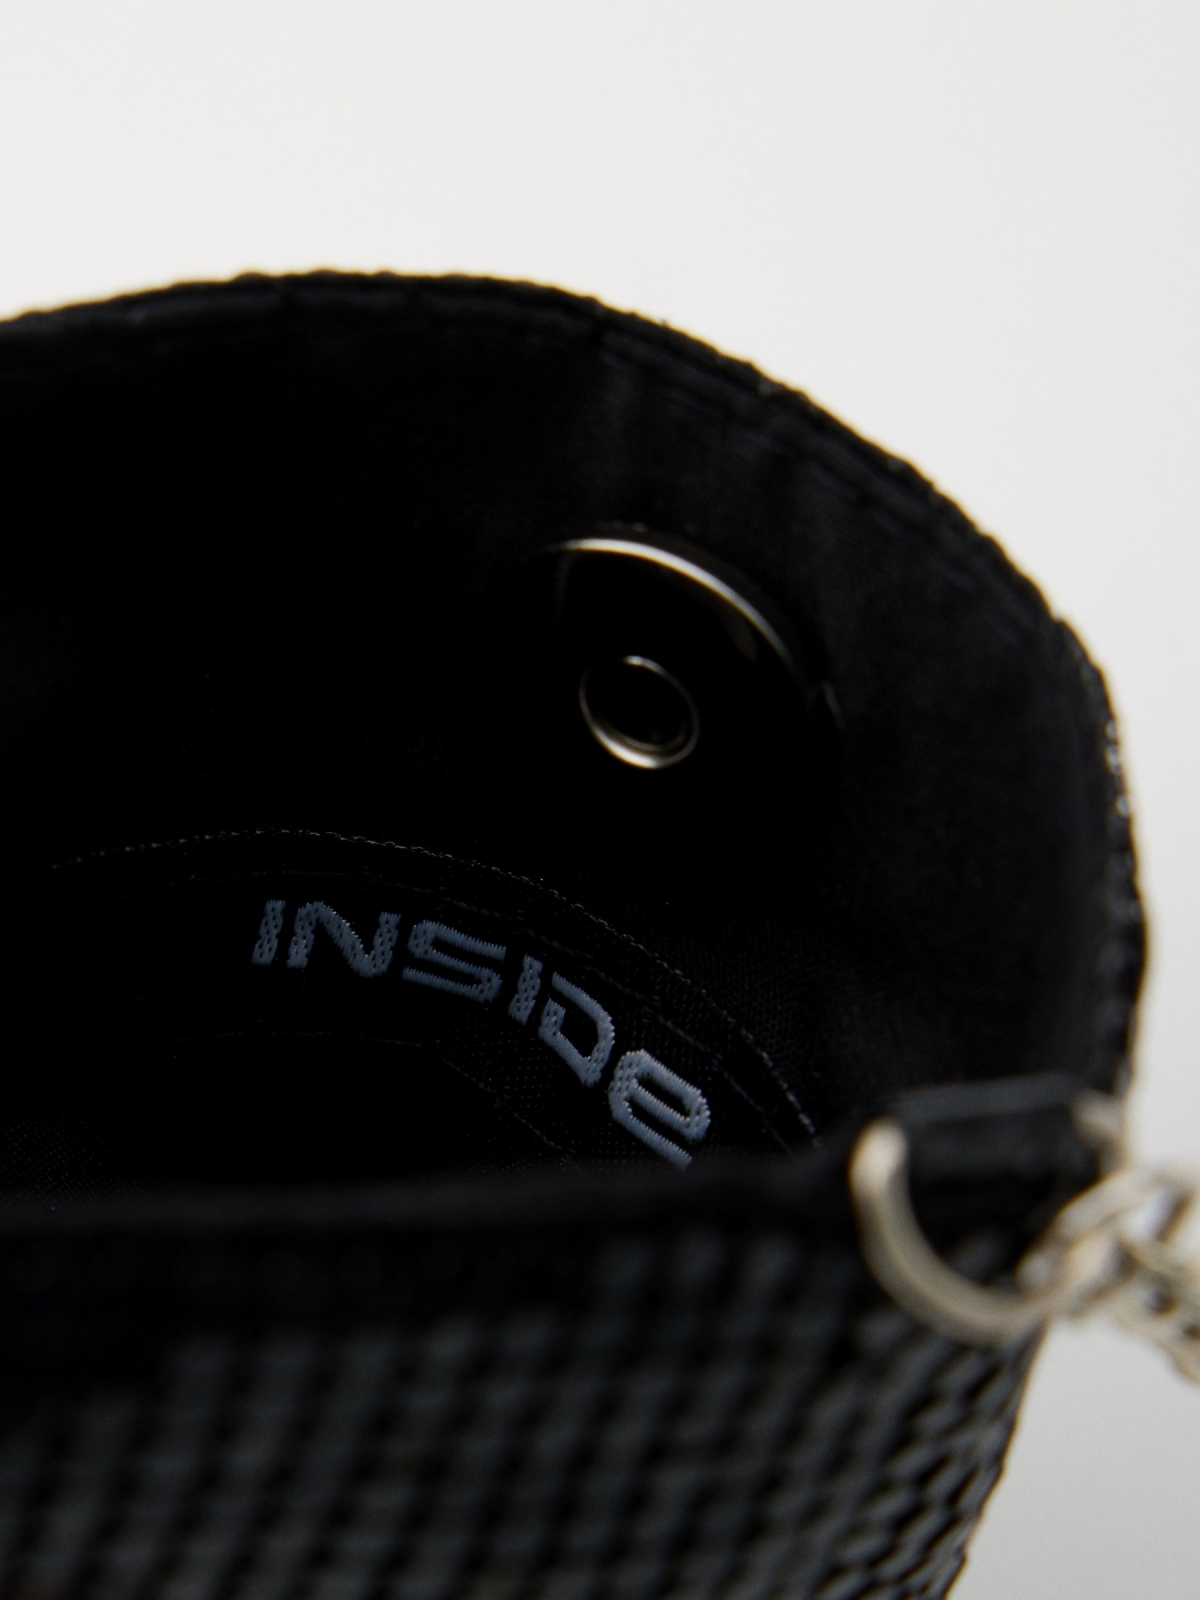 Mini bolsa para smartphone preto vista detalhe